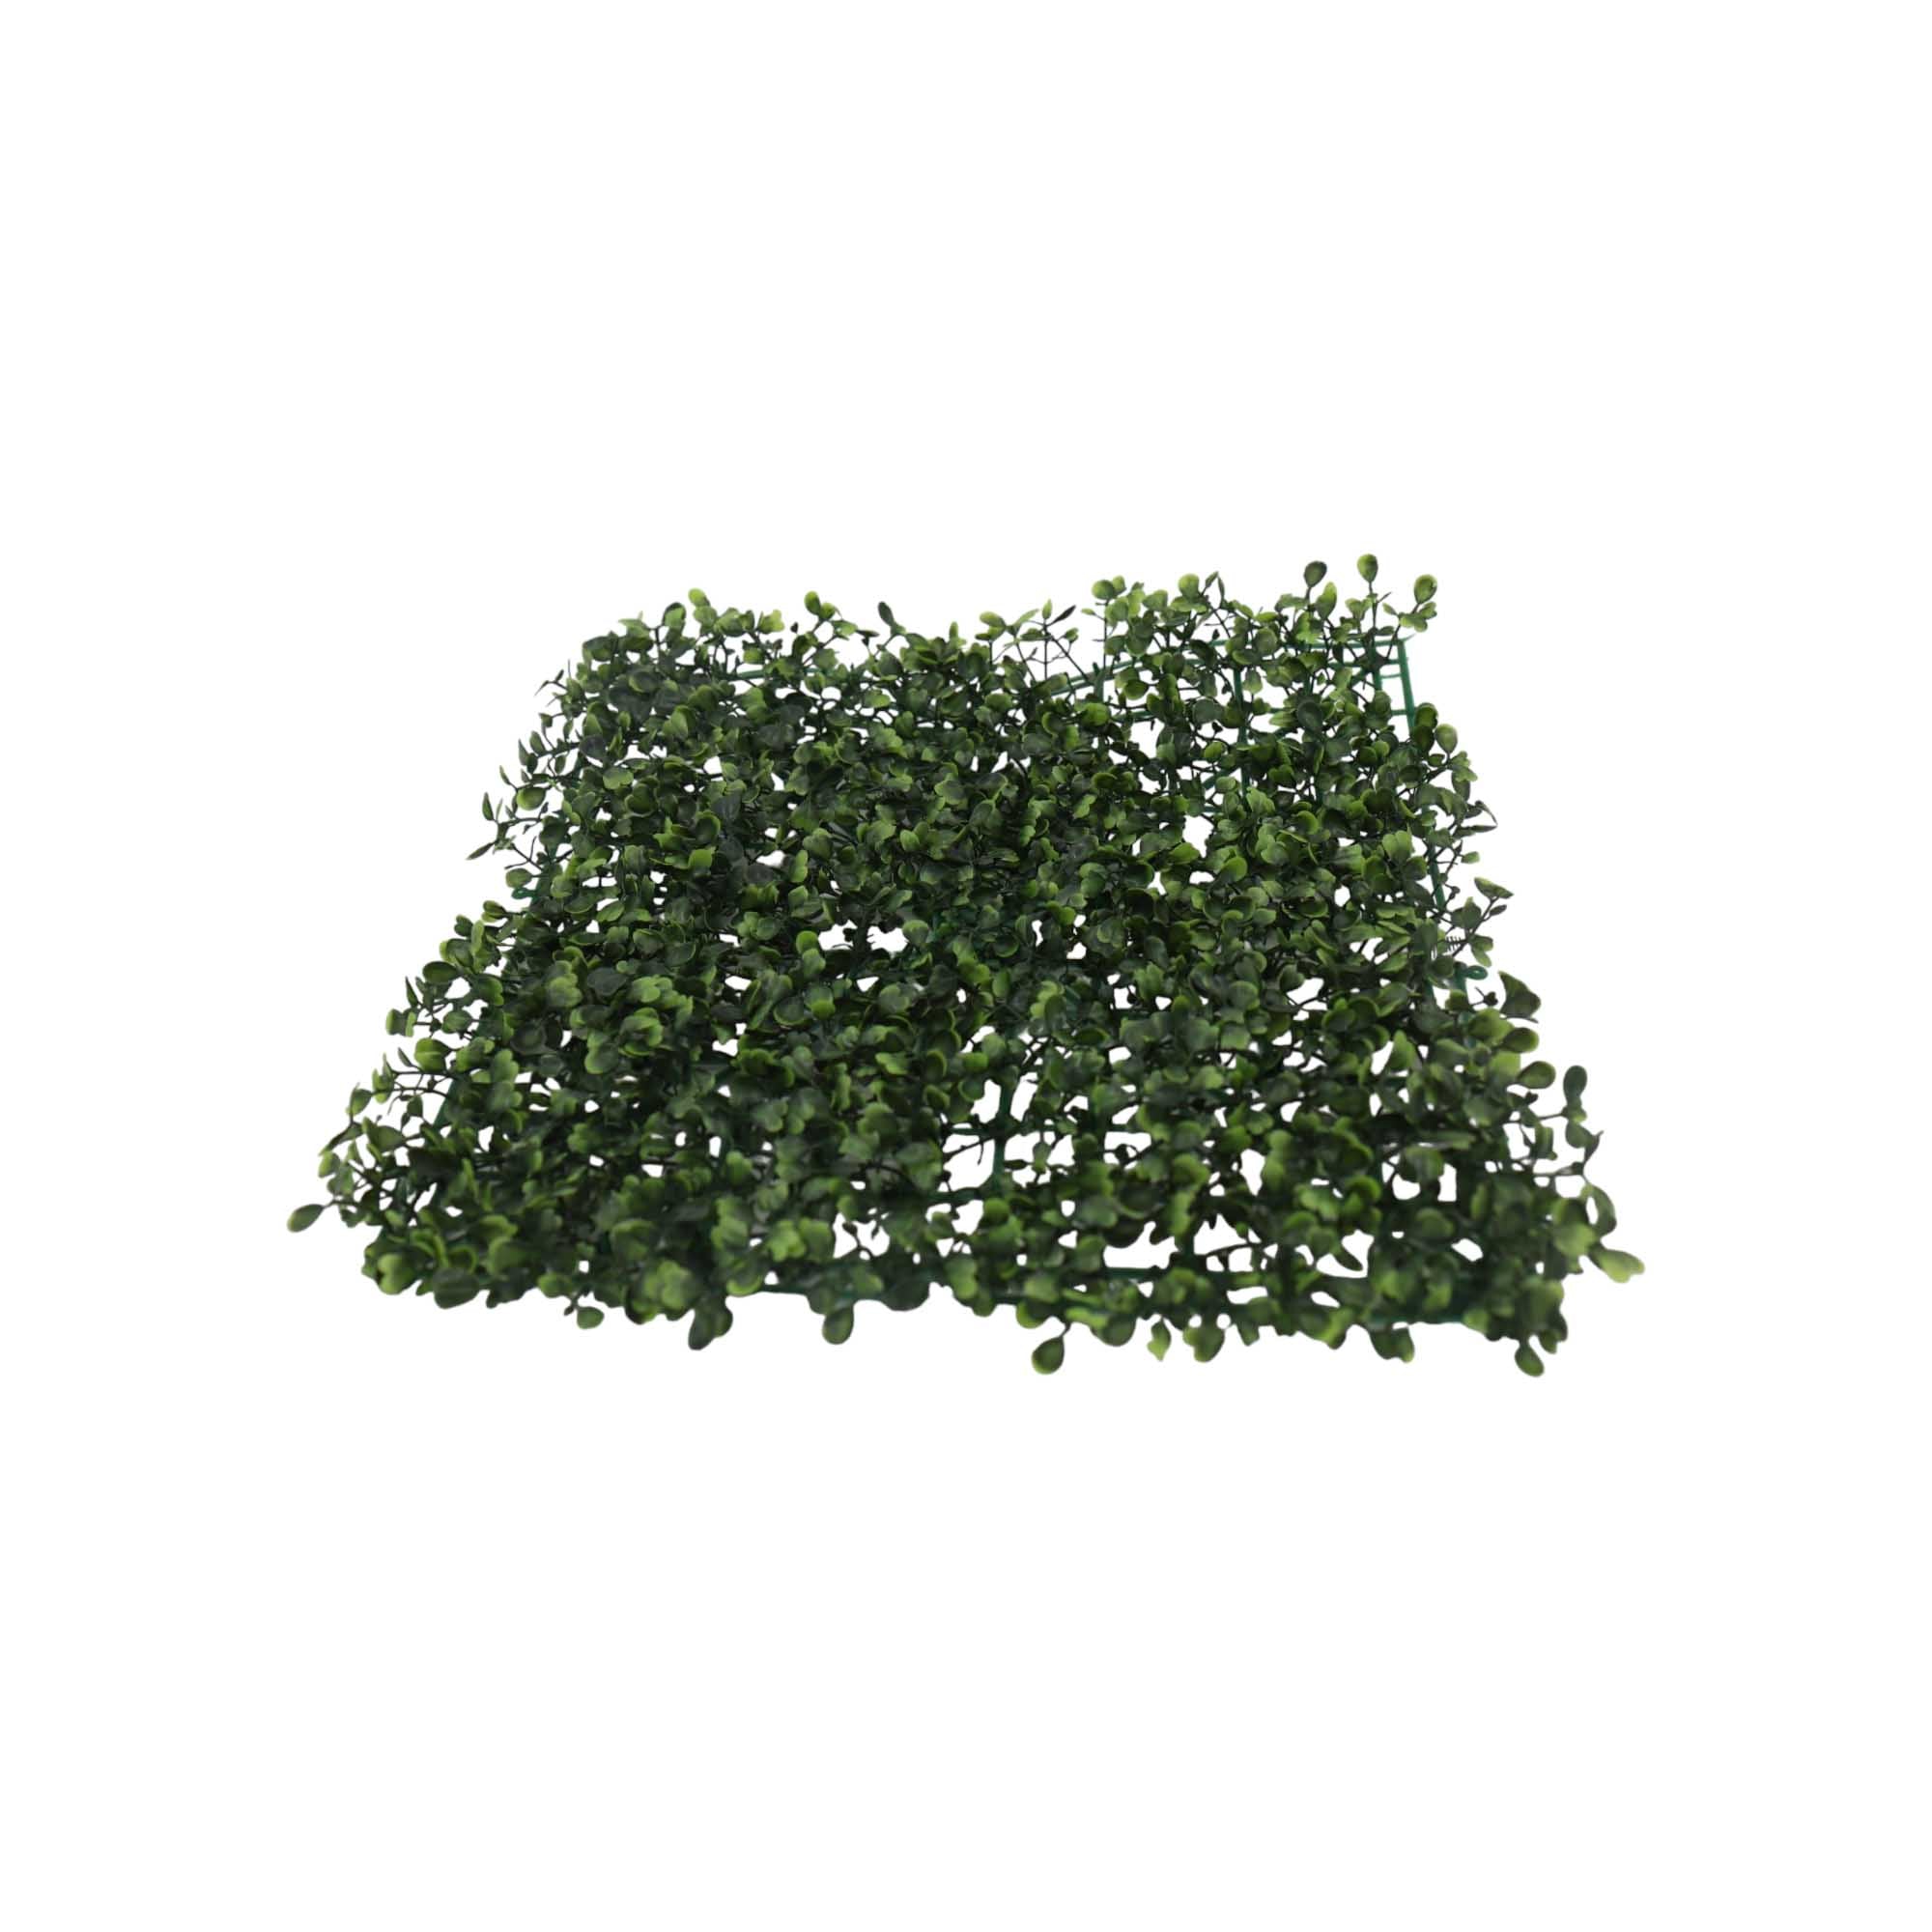 Artificial Decorative Lawn 30x30cm Grass Turf